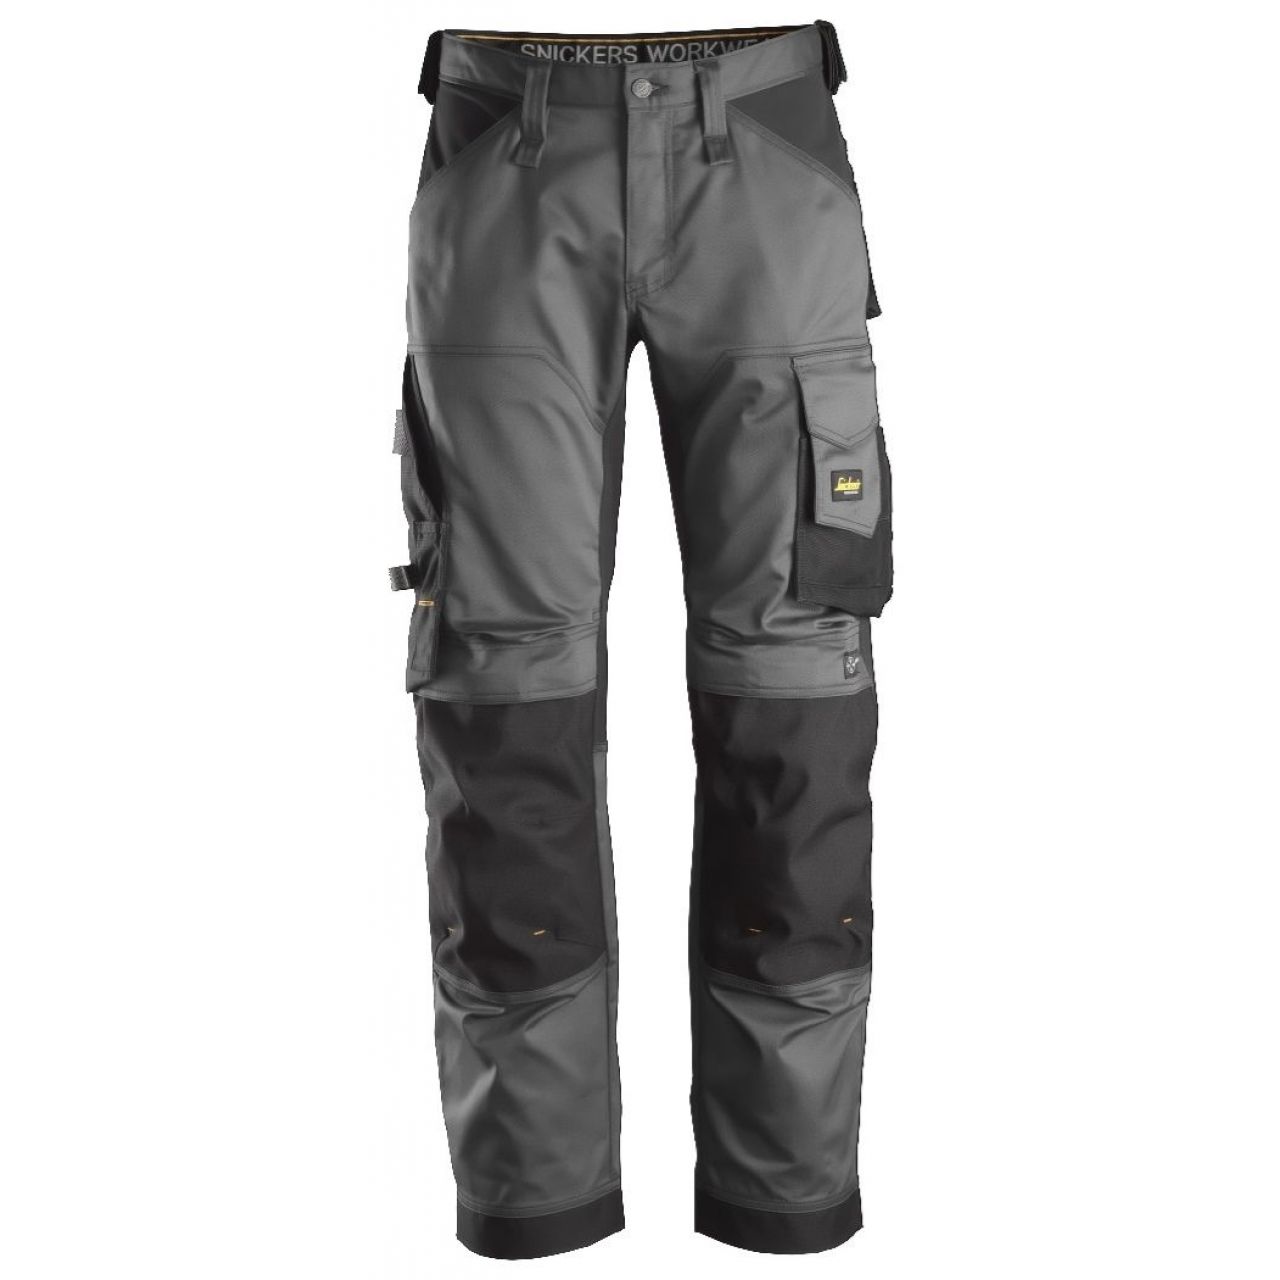 Pantalon elastico ajuste holgado AllroundWork gris acero-negro talla 256